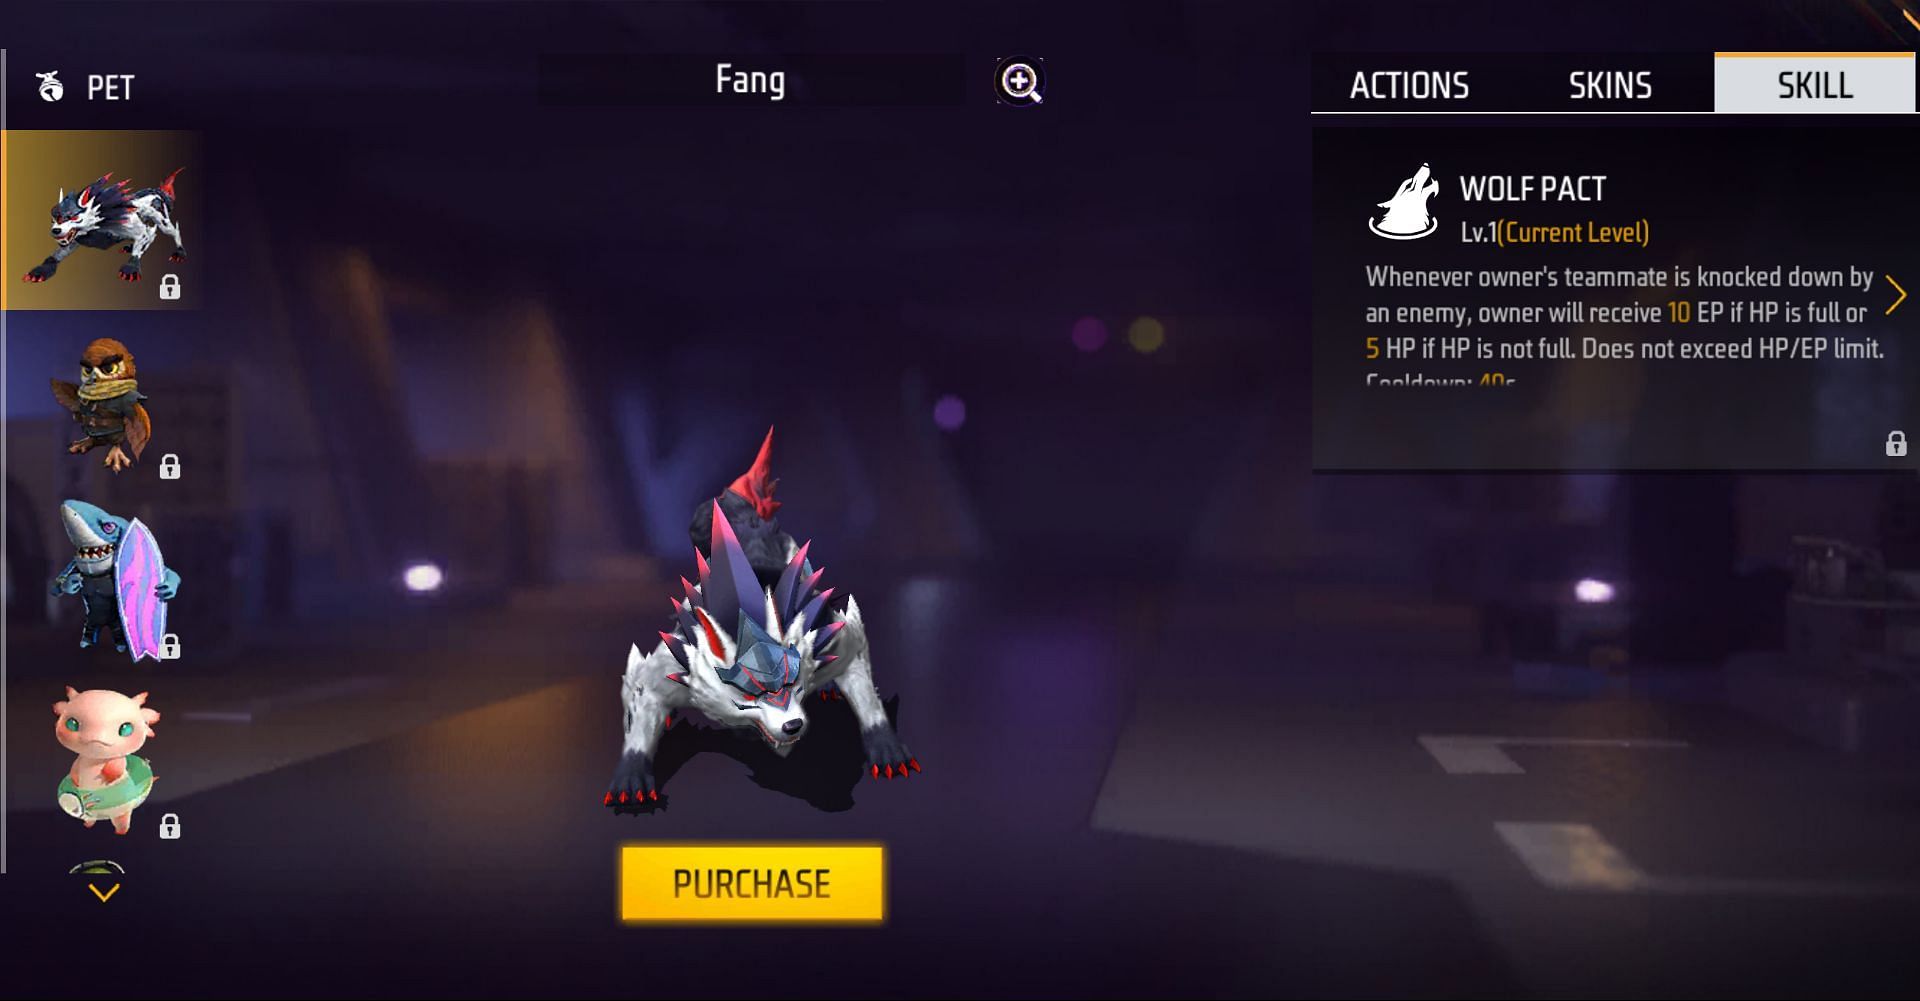 Fang pet in Free Fire MAX (Image via Garena)